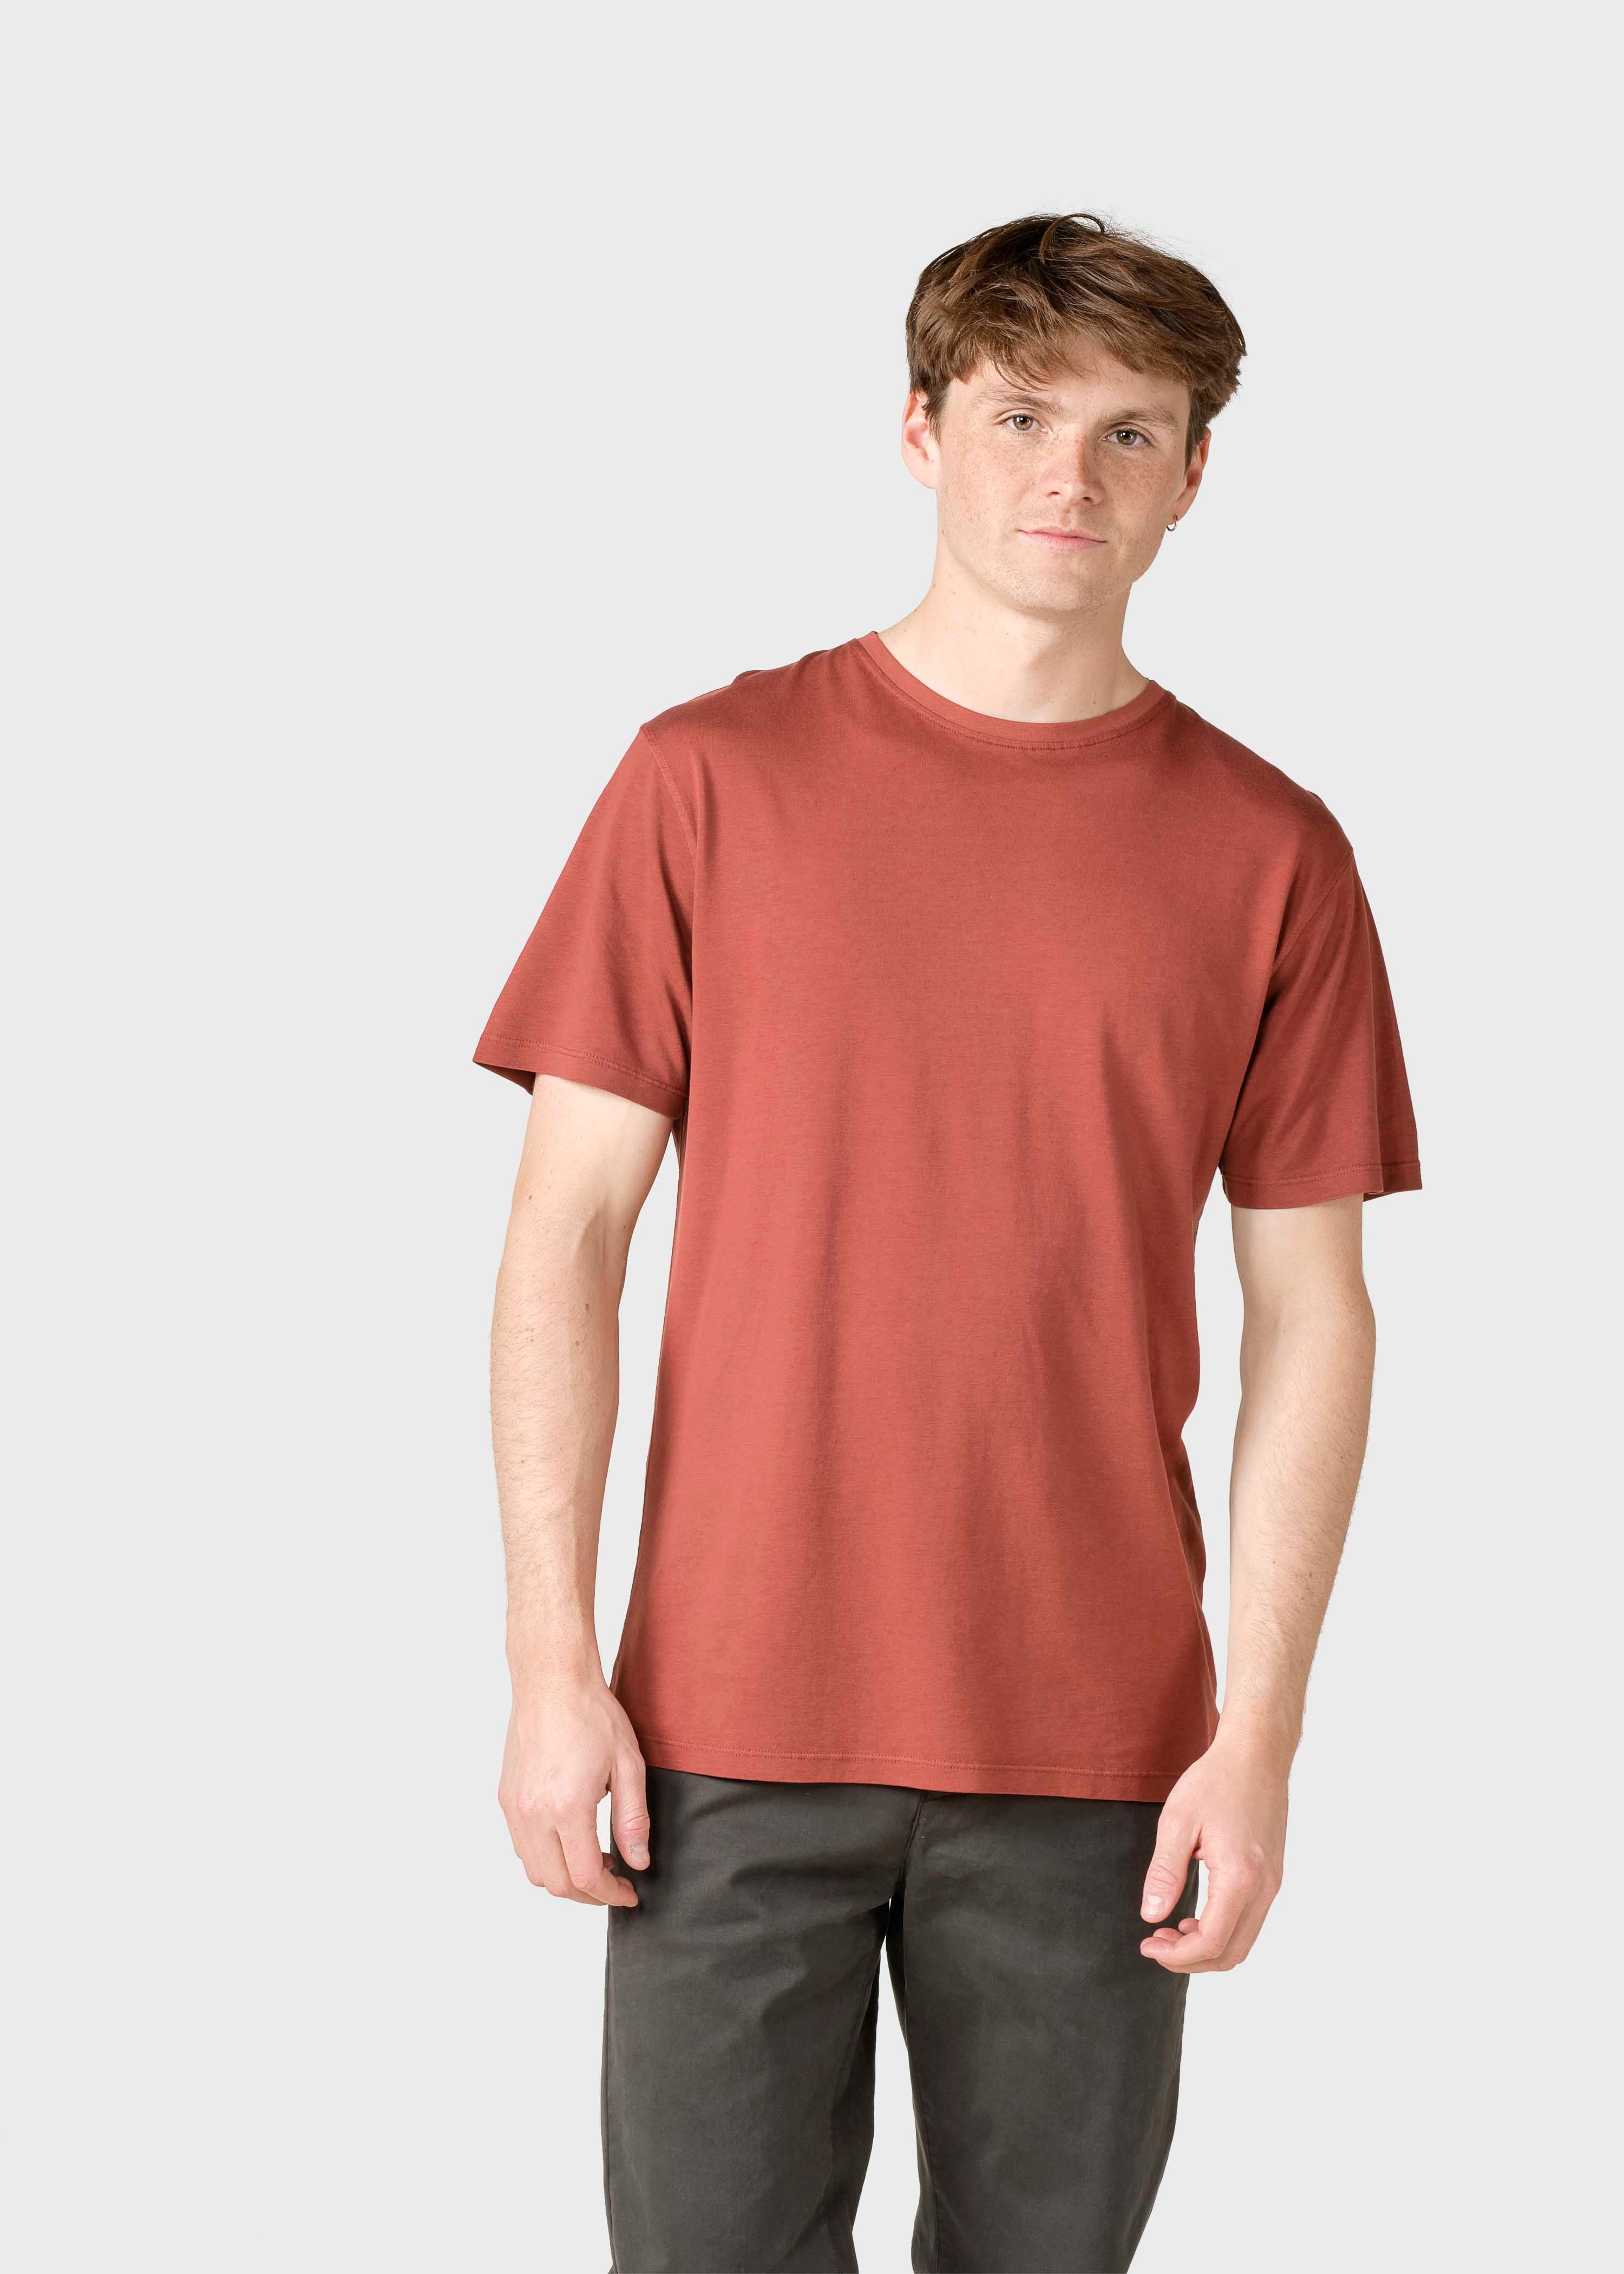 Herren-T-Shirt Rufus ocker